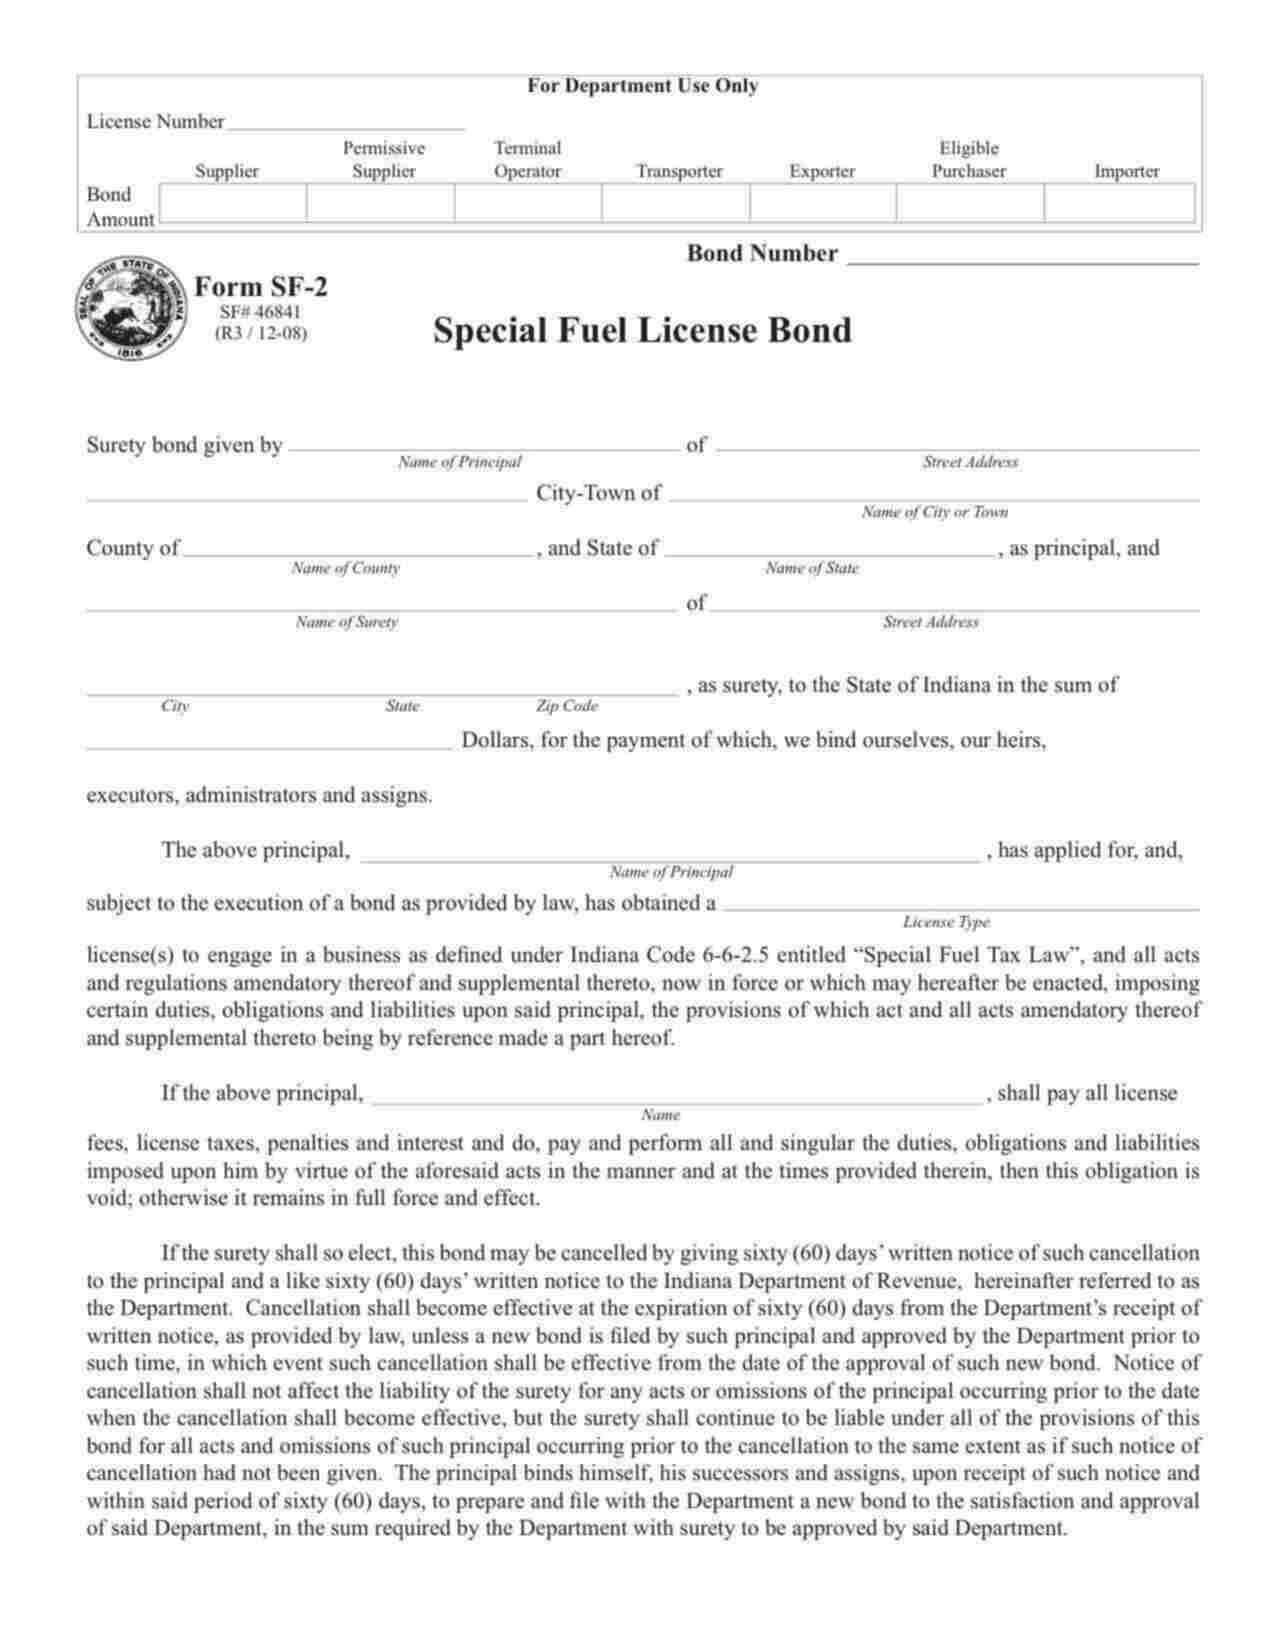 Indiana Special Fuel License - Supplier Bond Form